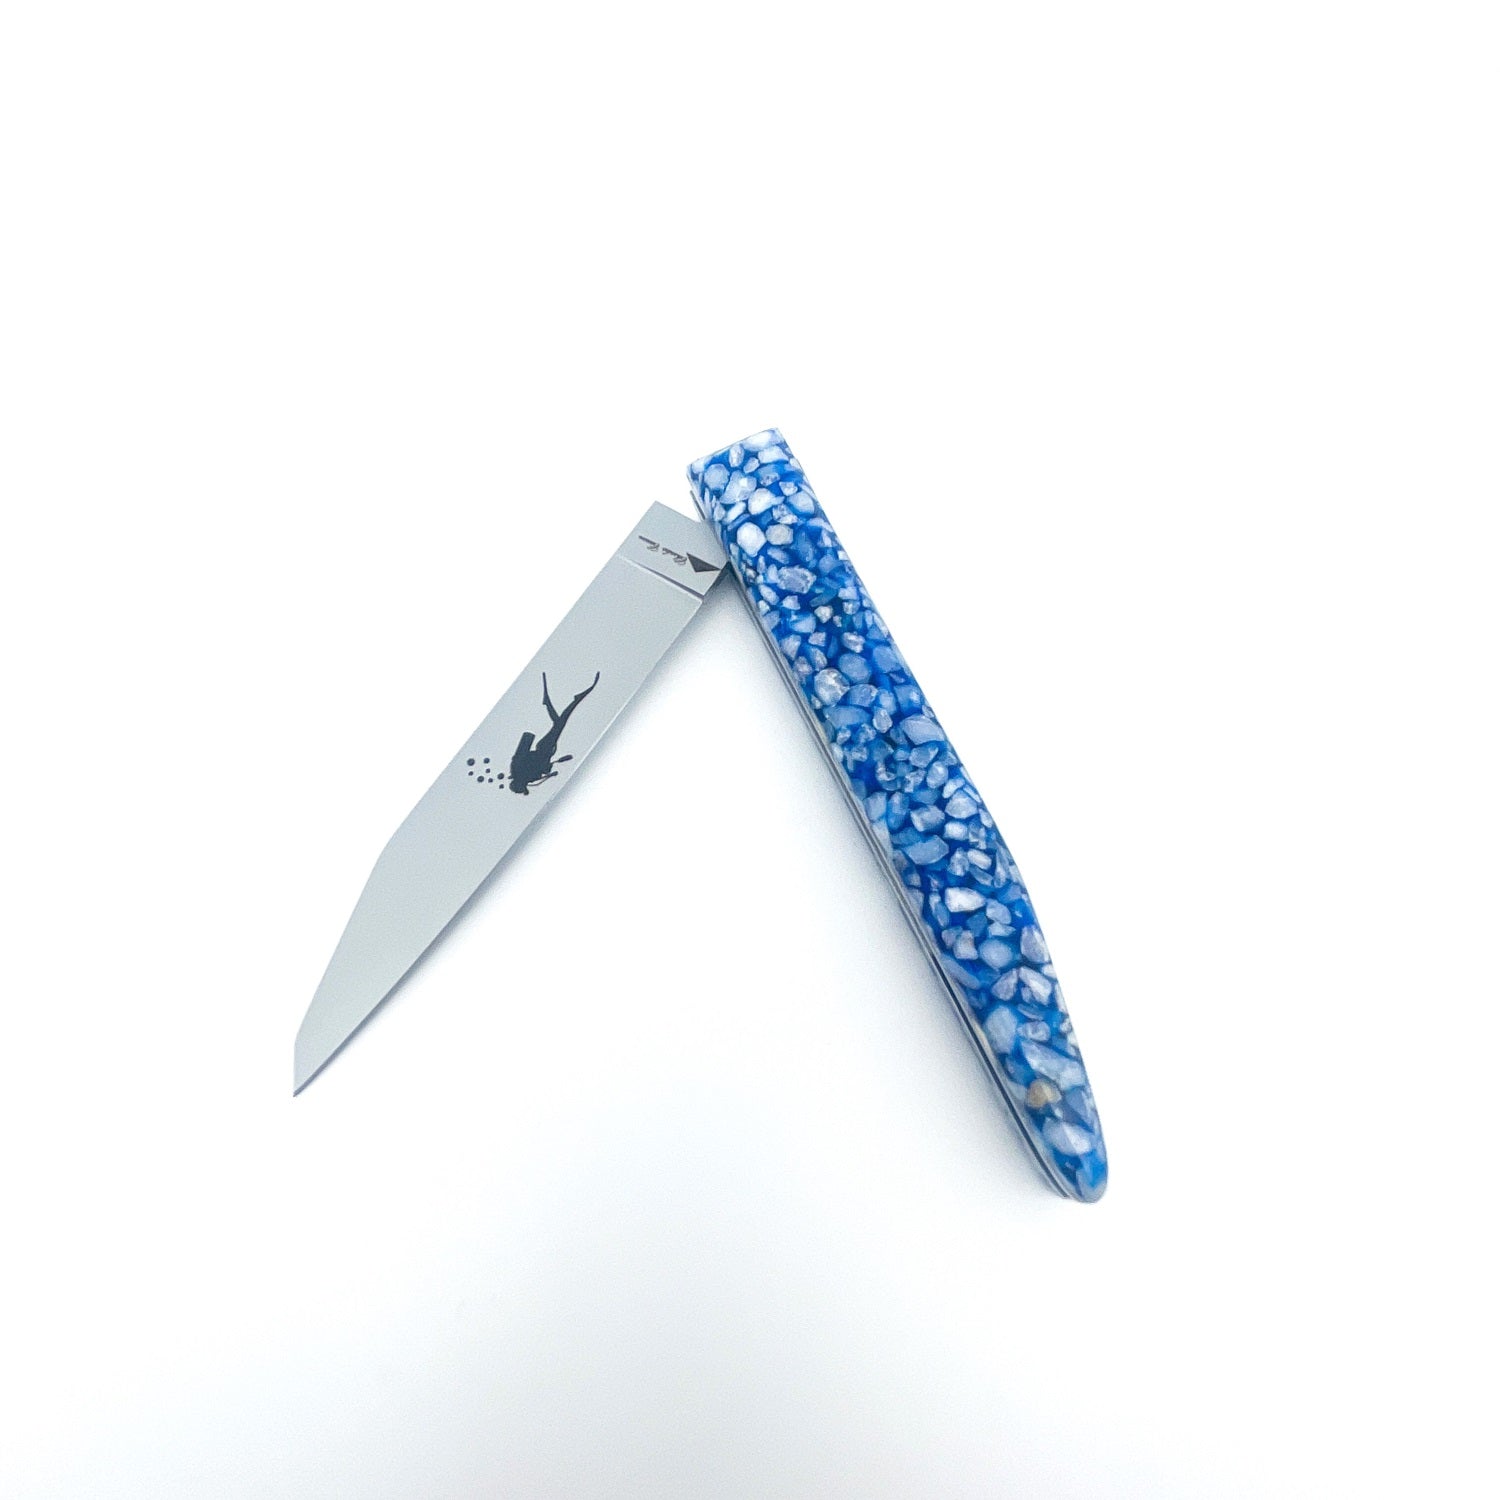 Folding knife The big blue